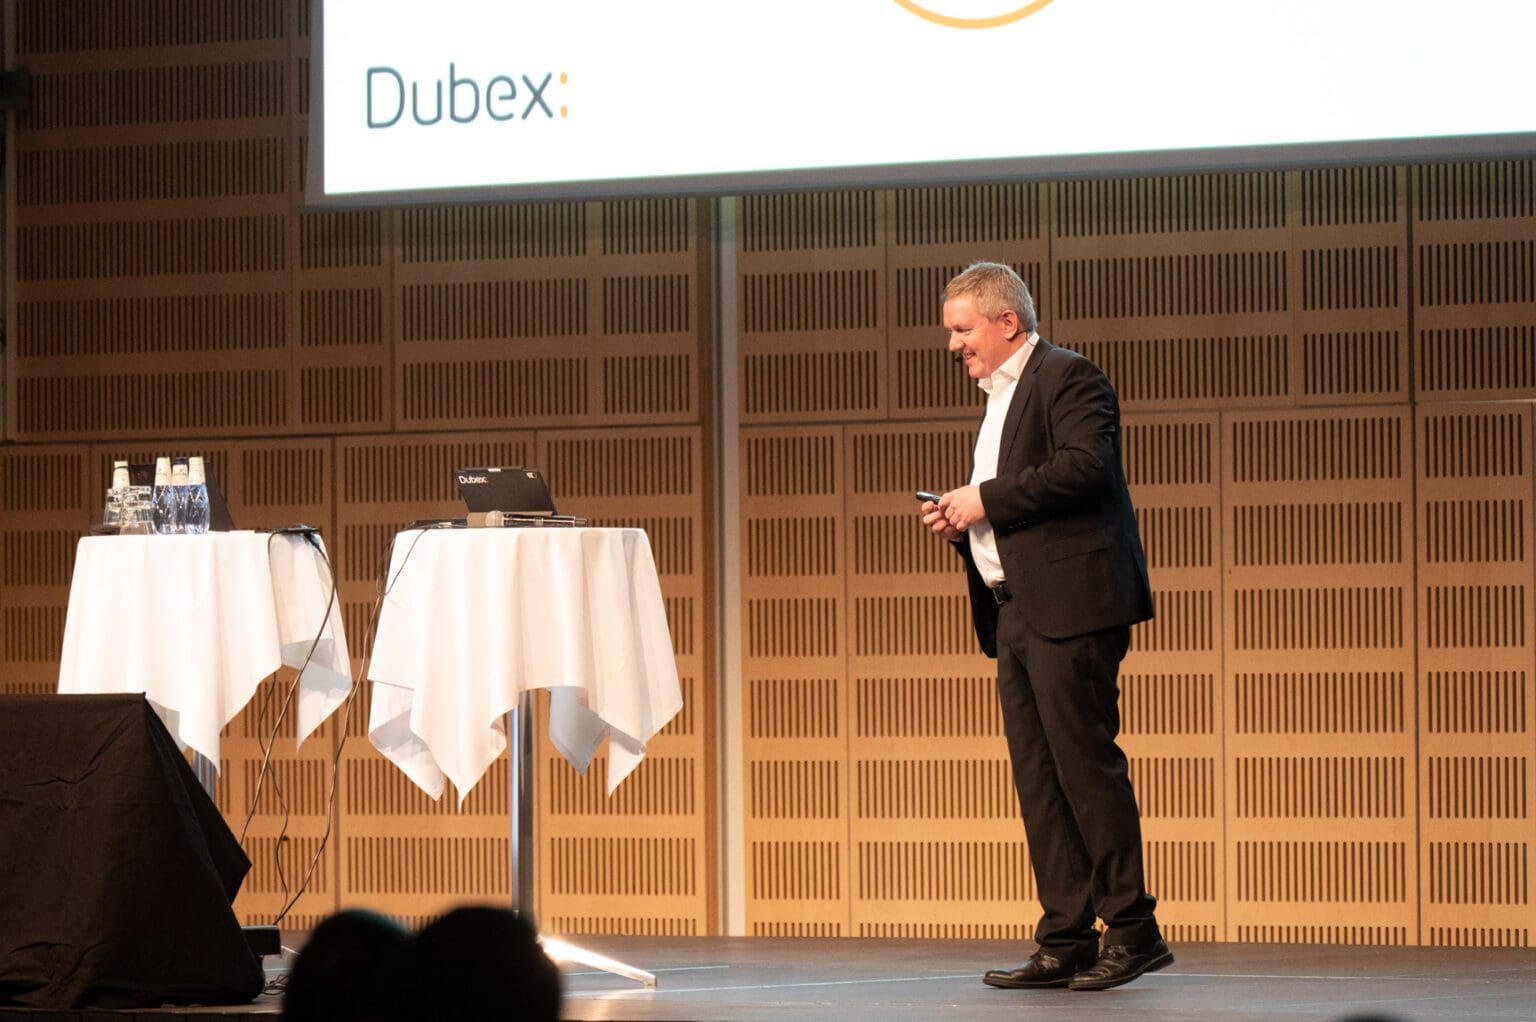 Jacob Herbst, Dubex' CTO held his keynote presentation with Keld Norman